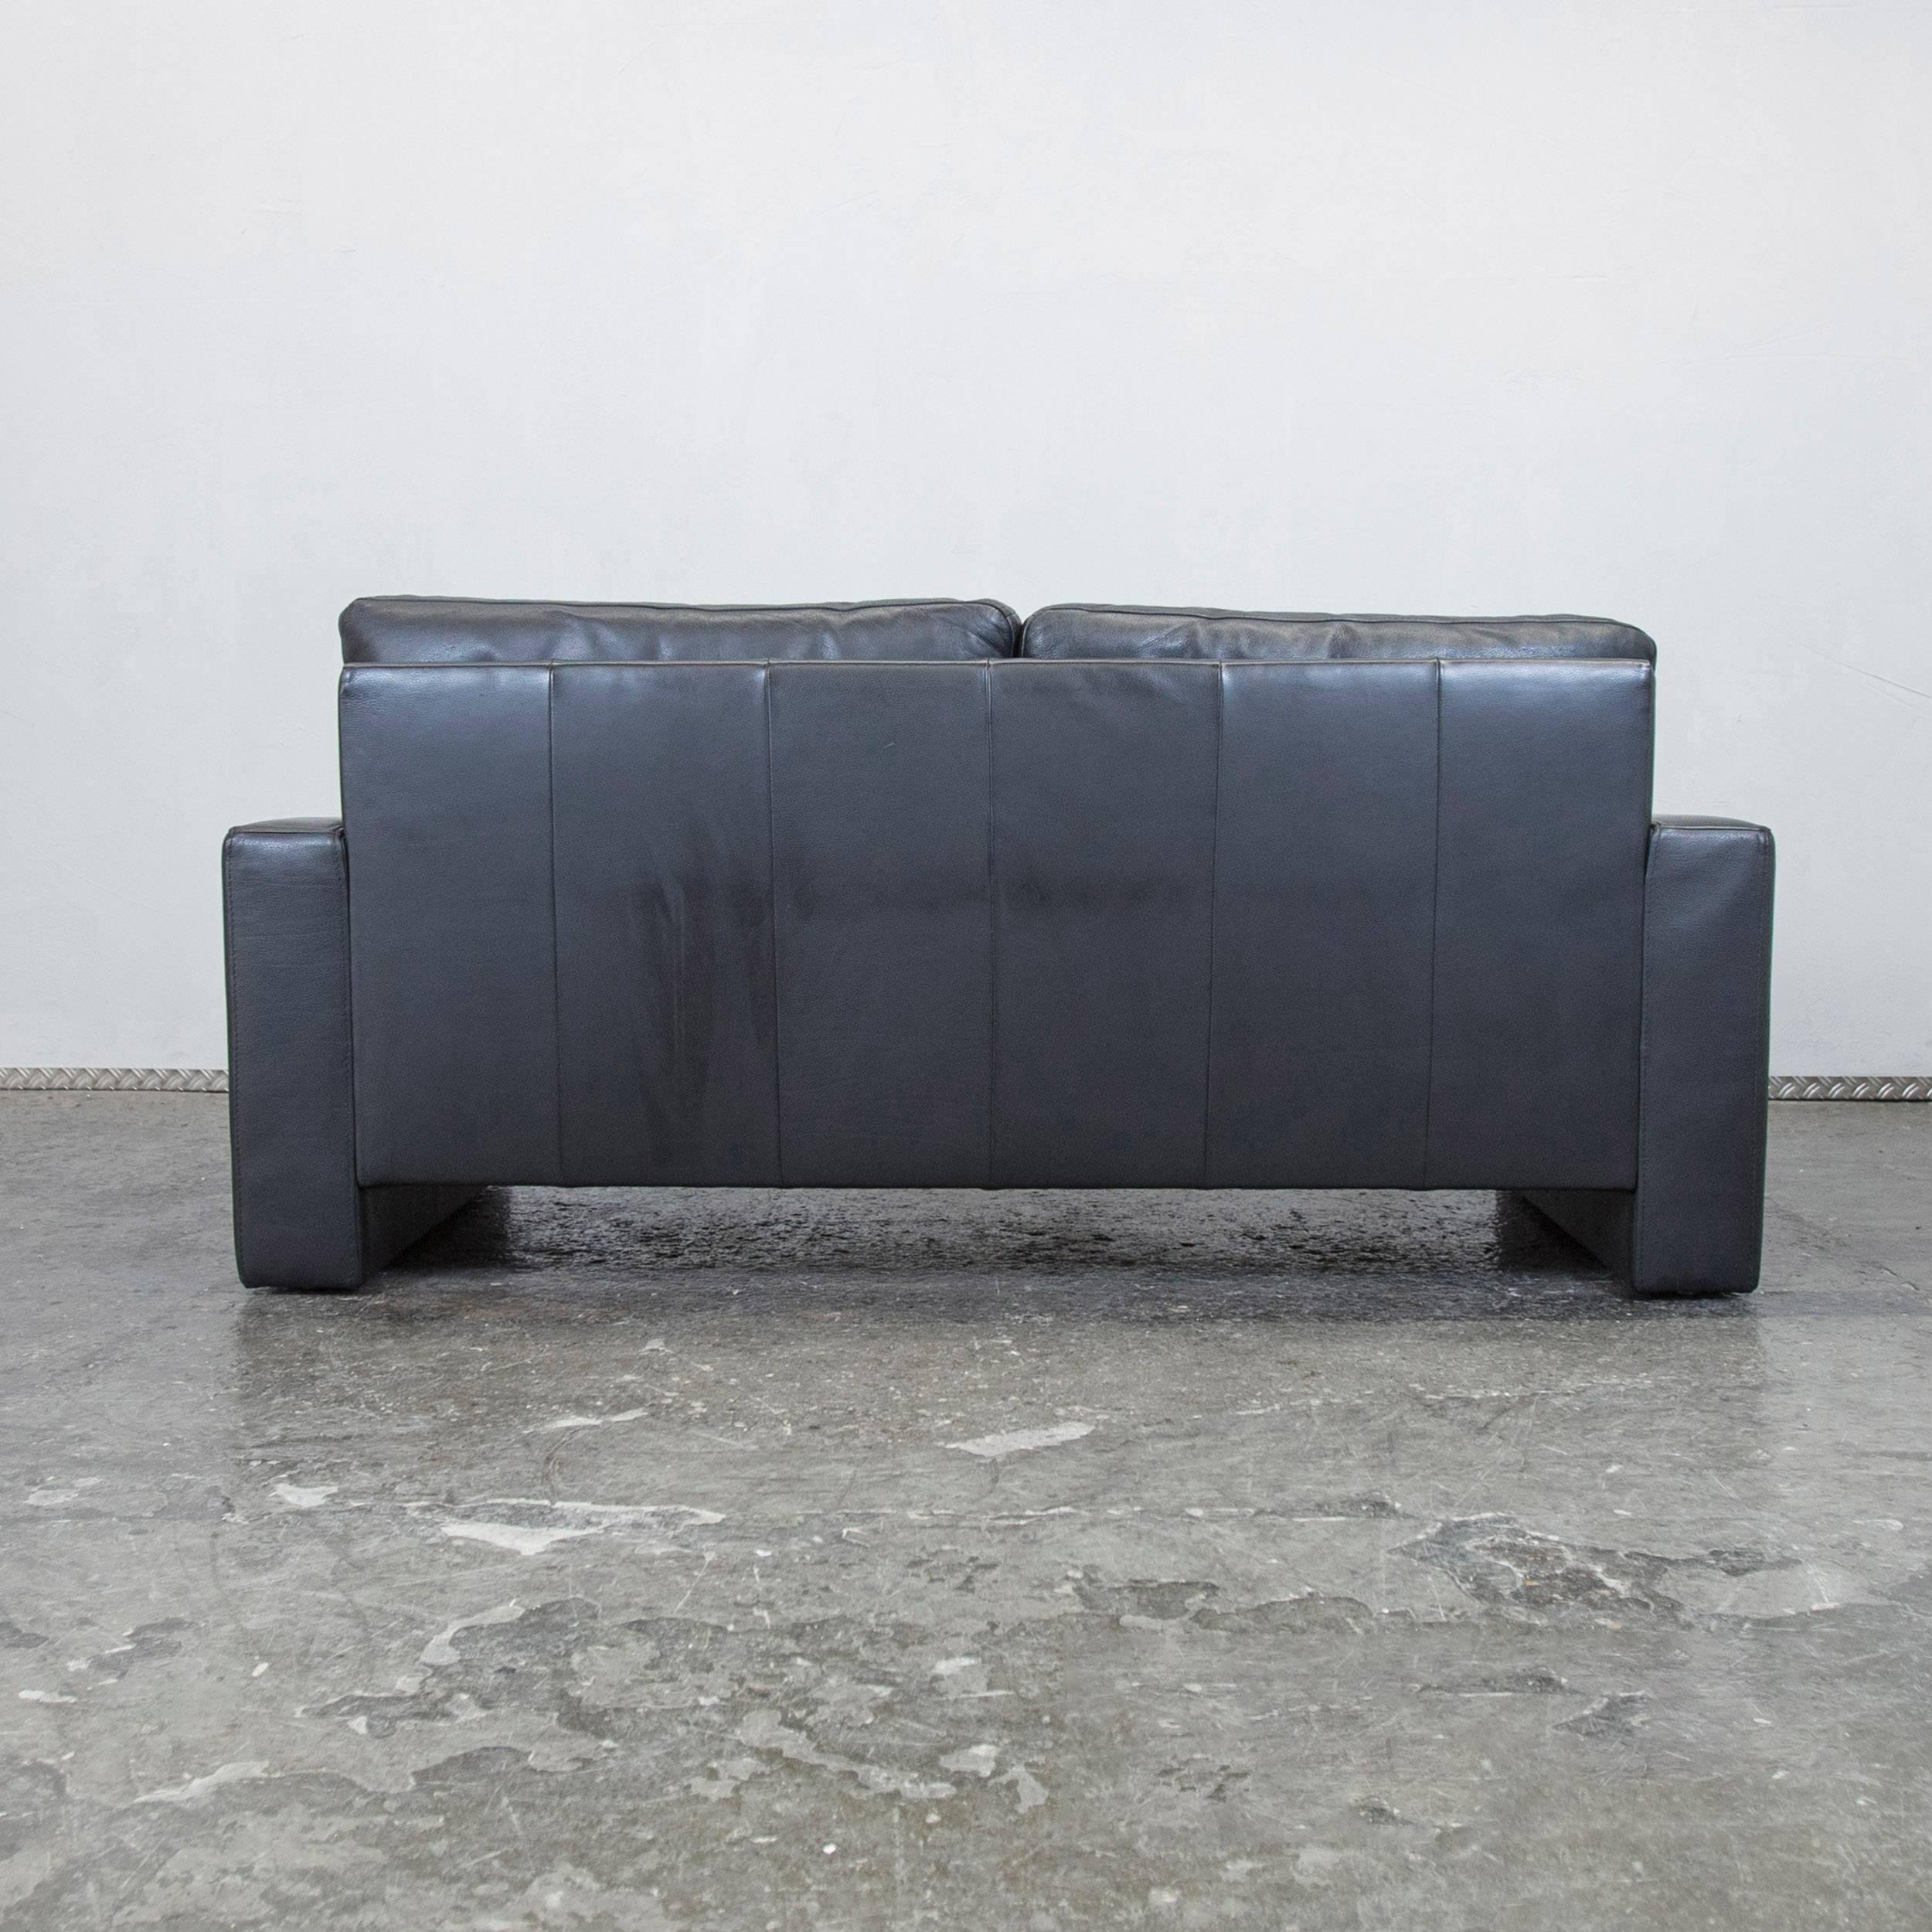 Külkens & Sohn Designer Leather Sofa Black Two-Seat Couch Modern For Sale 3